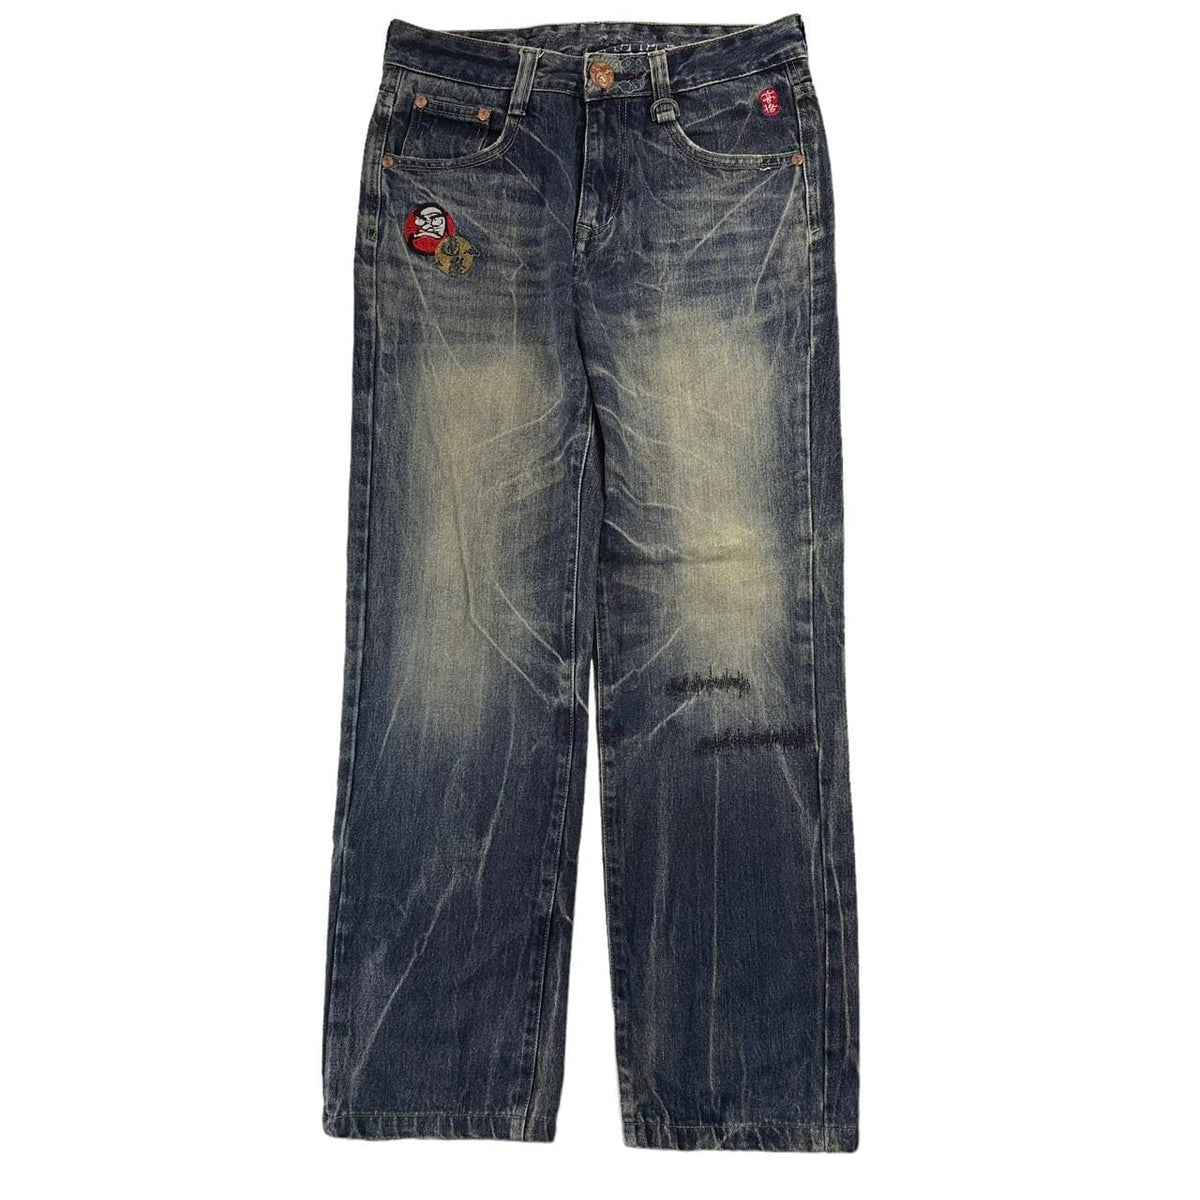 Vintage Eagle Japanese denim jeans trousers W30